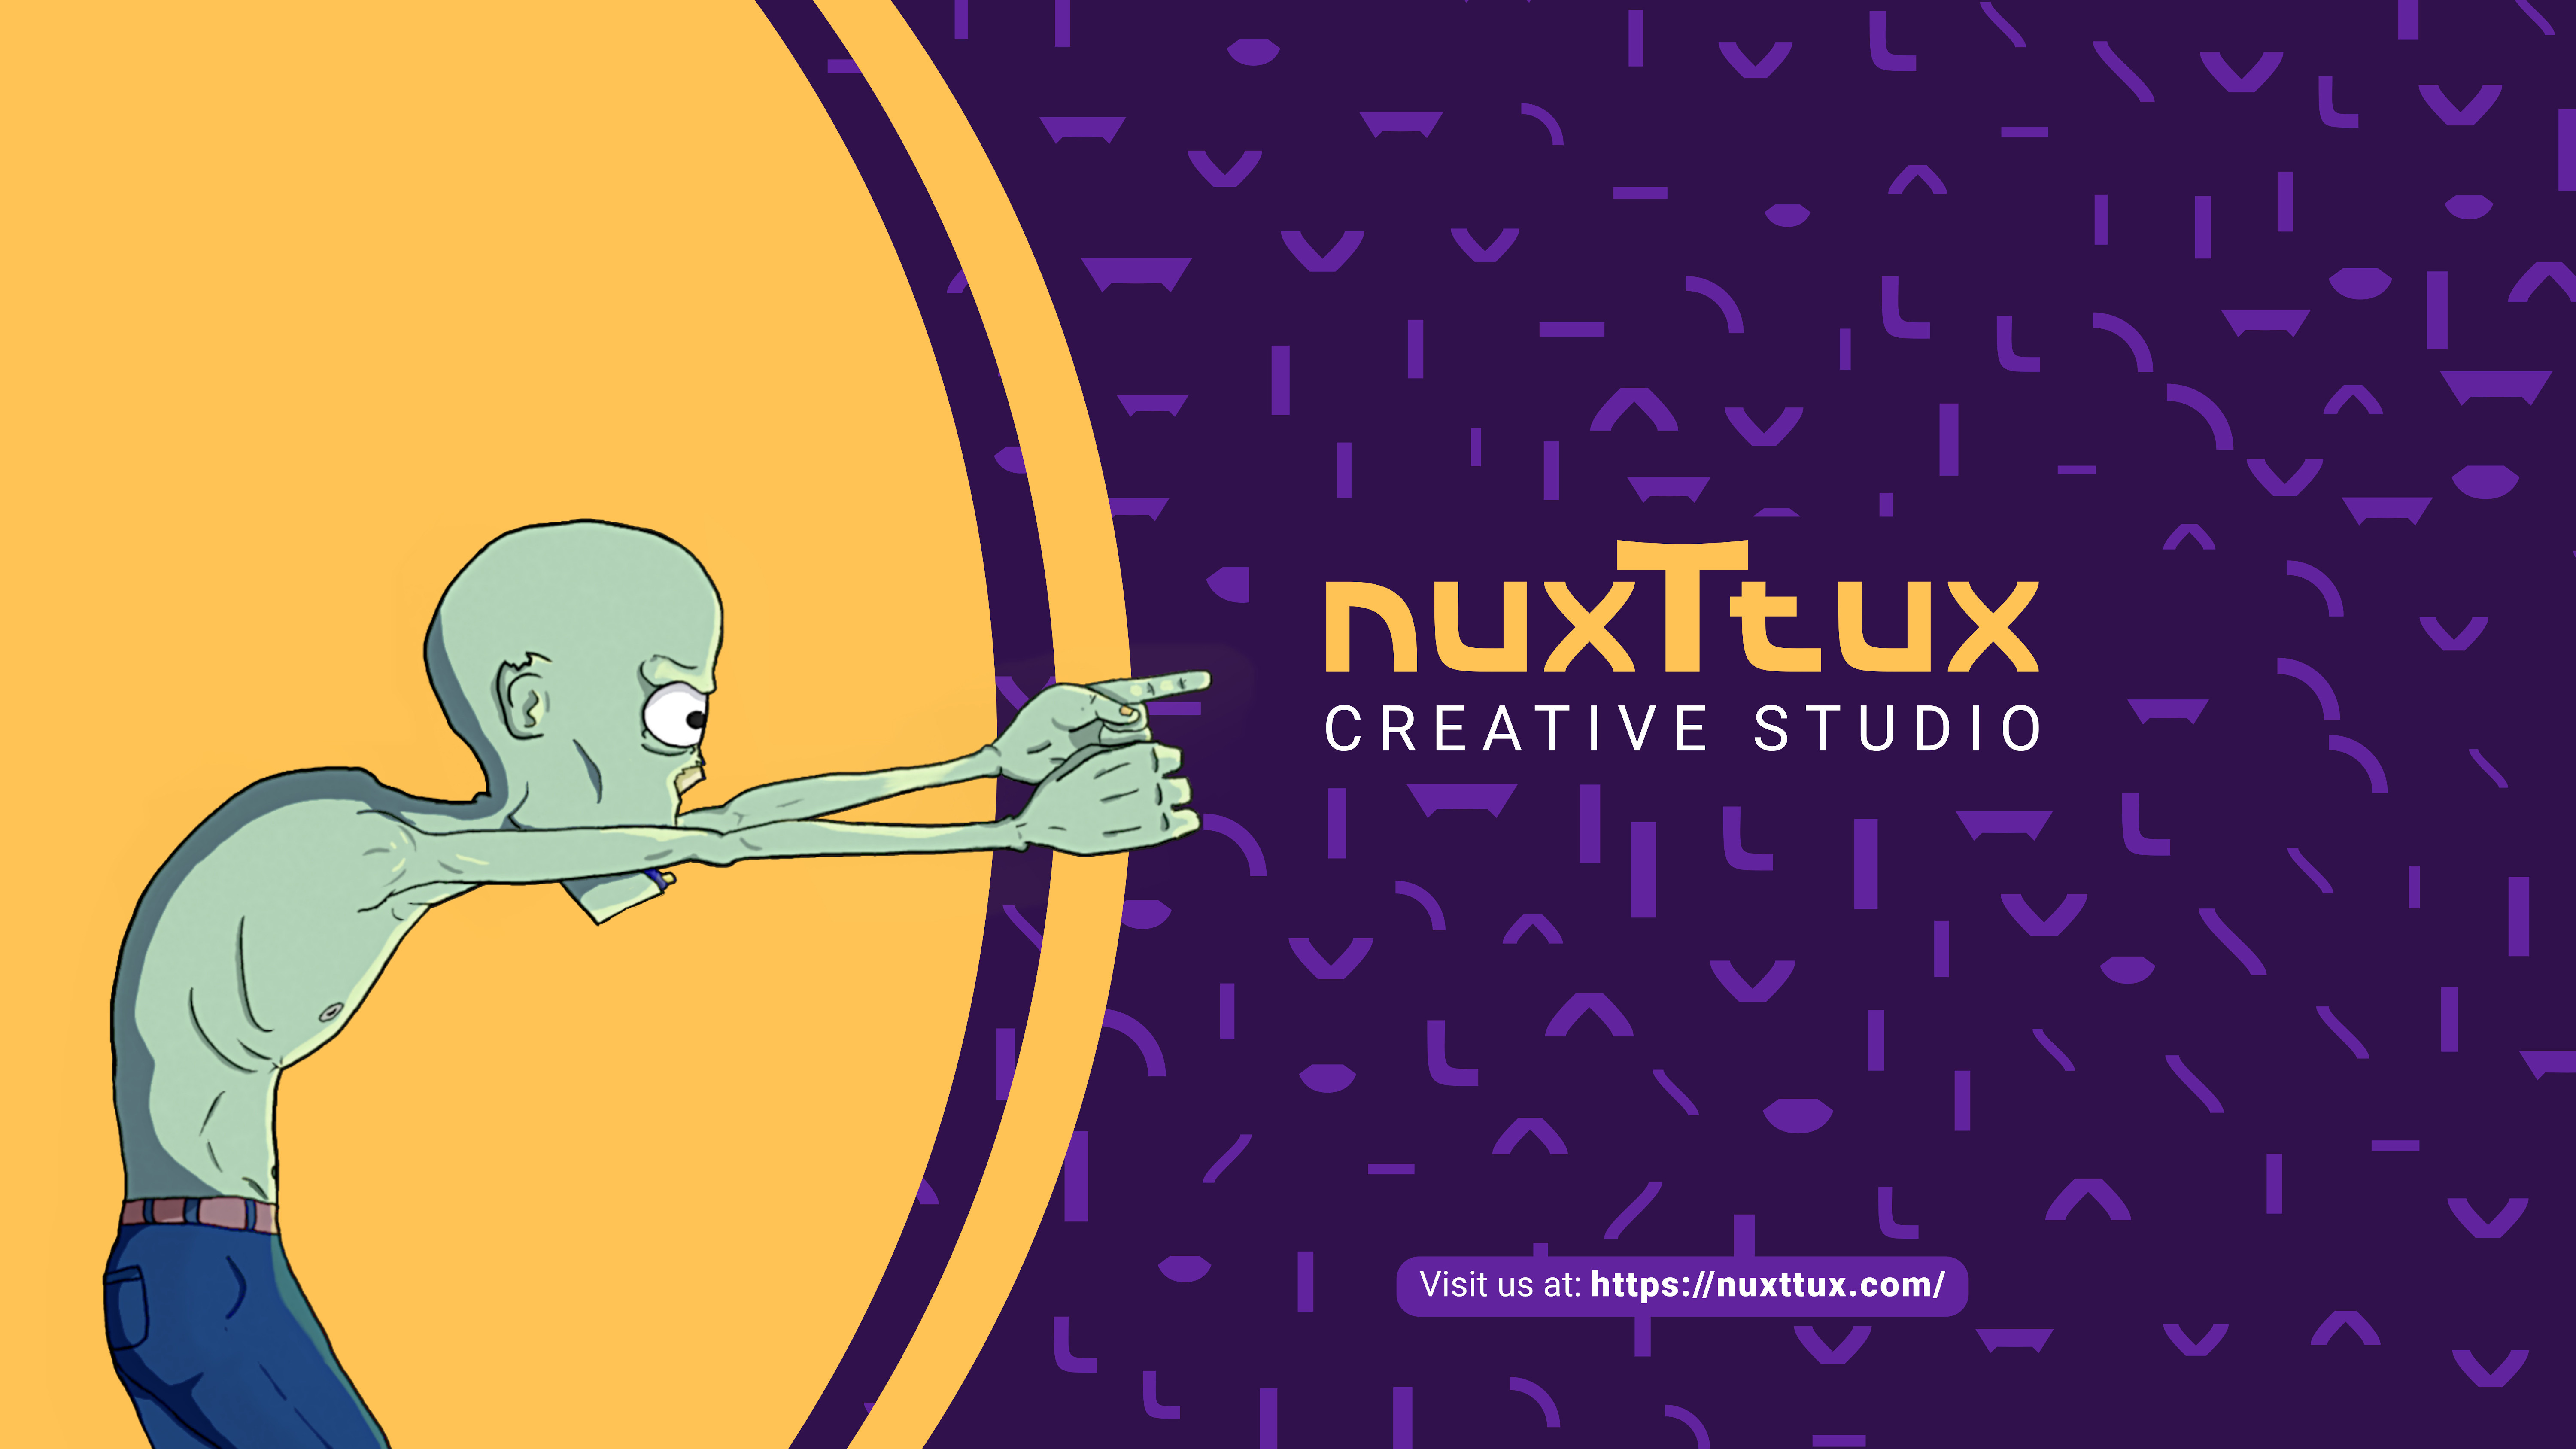 Welcome to Nuxttux Creative Studio